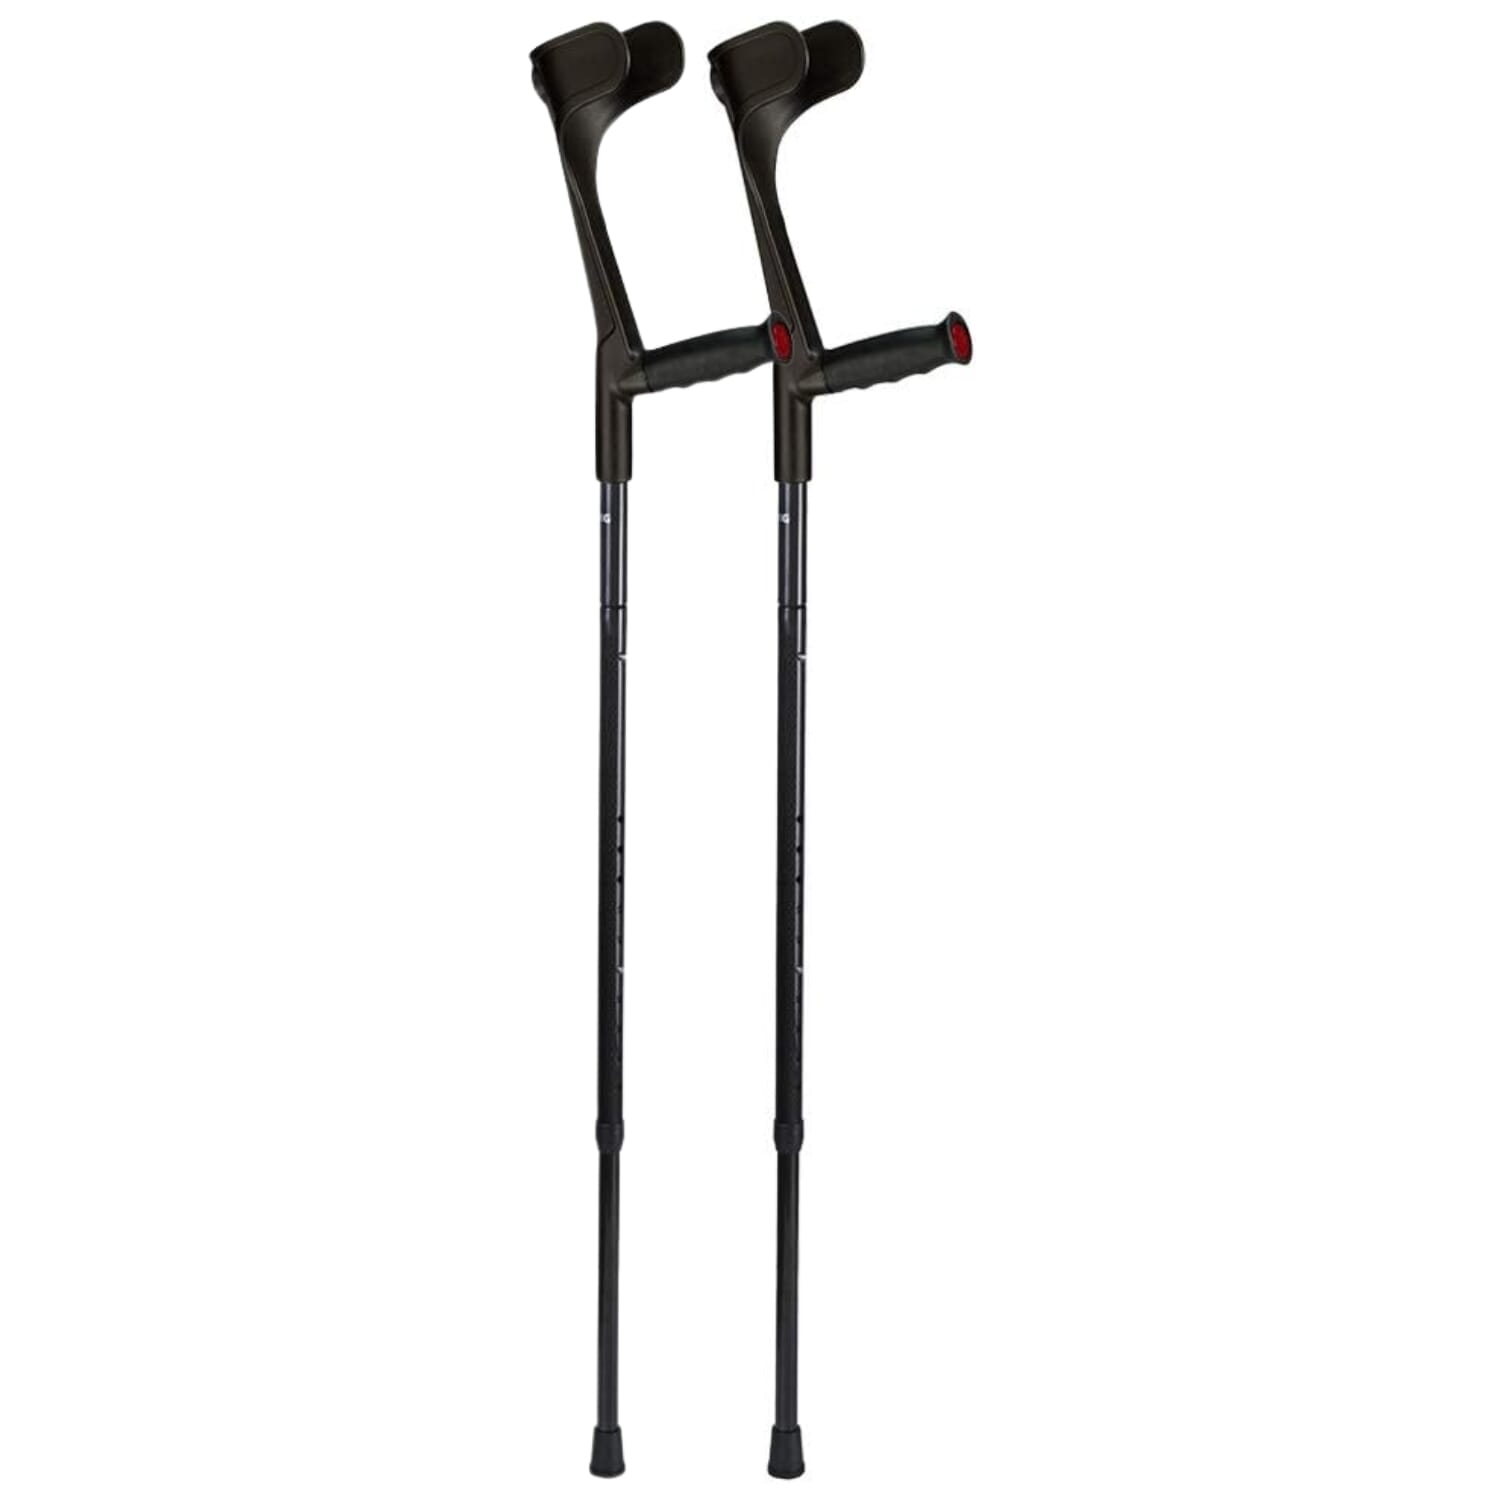 View Ossenberg Carbon Fibre Folding Crutches Black Pair information